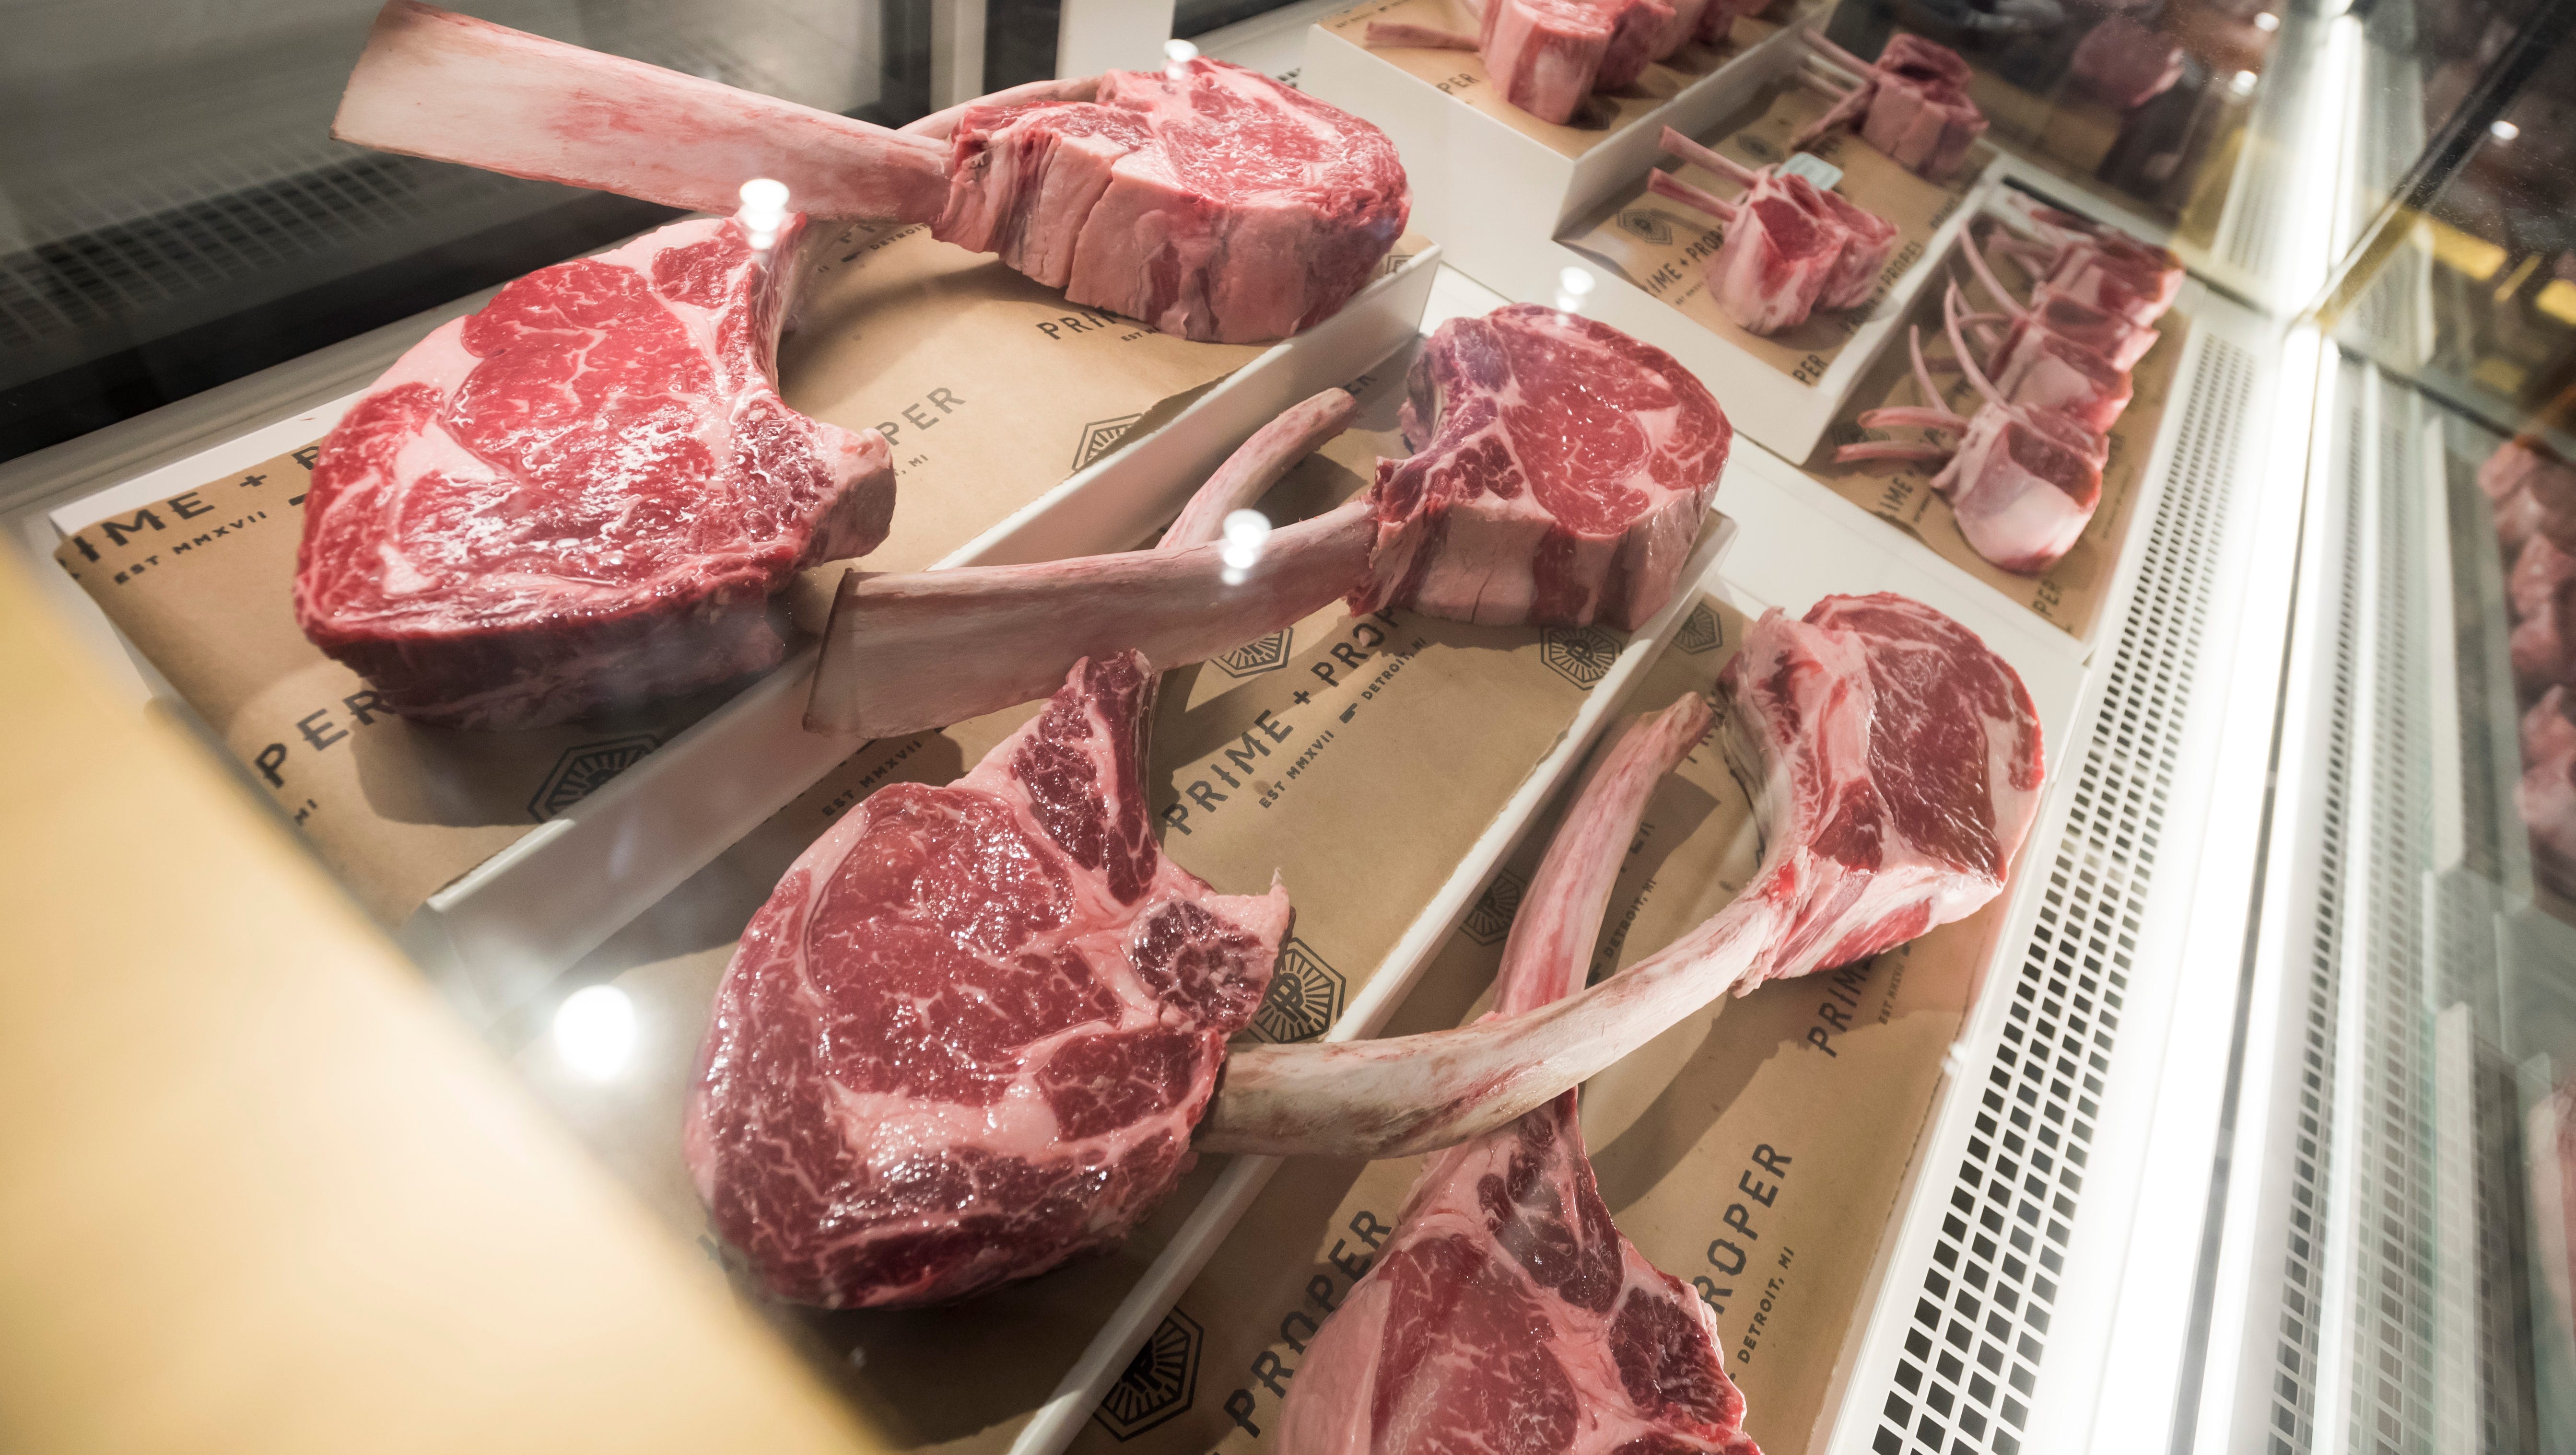 Tomahawk rib eye steaks inside the butcher display case.